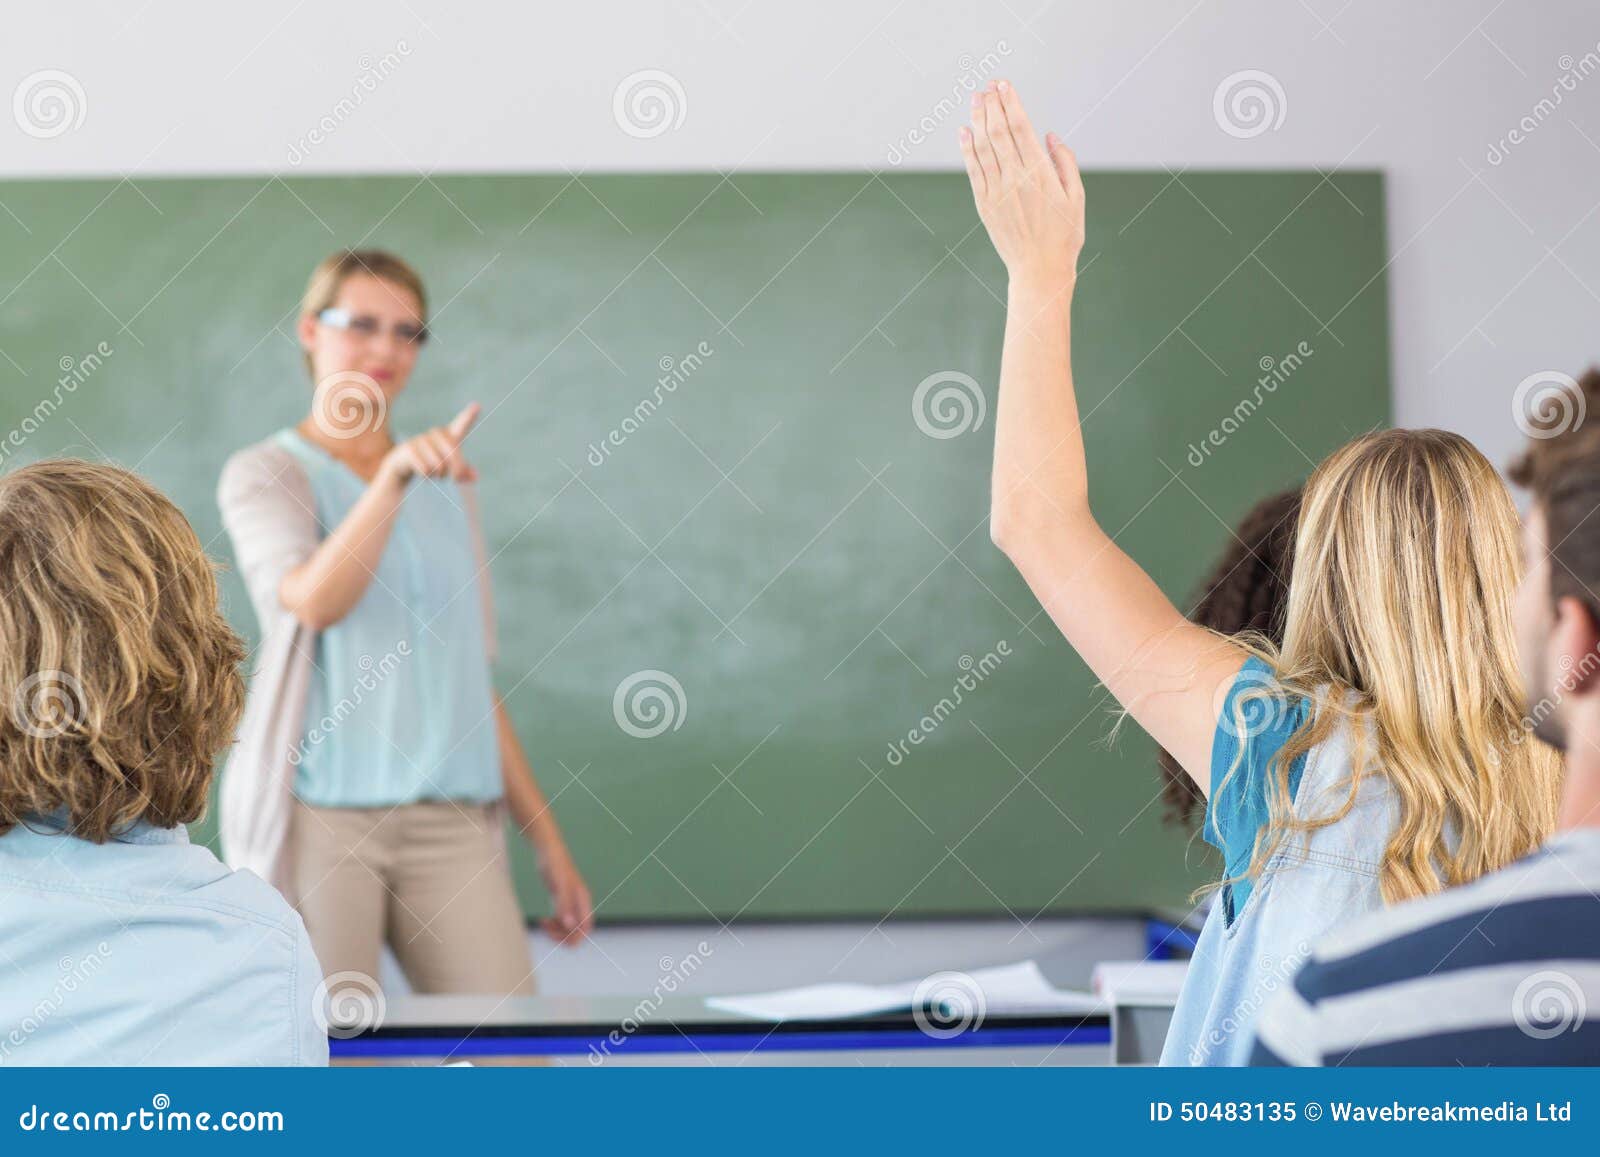 student raising hand in classroom